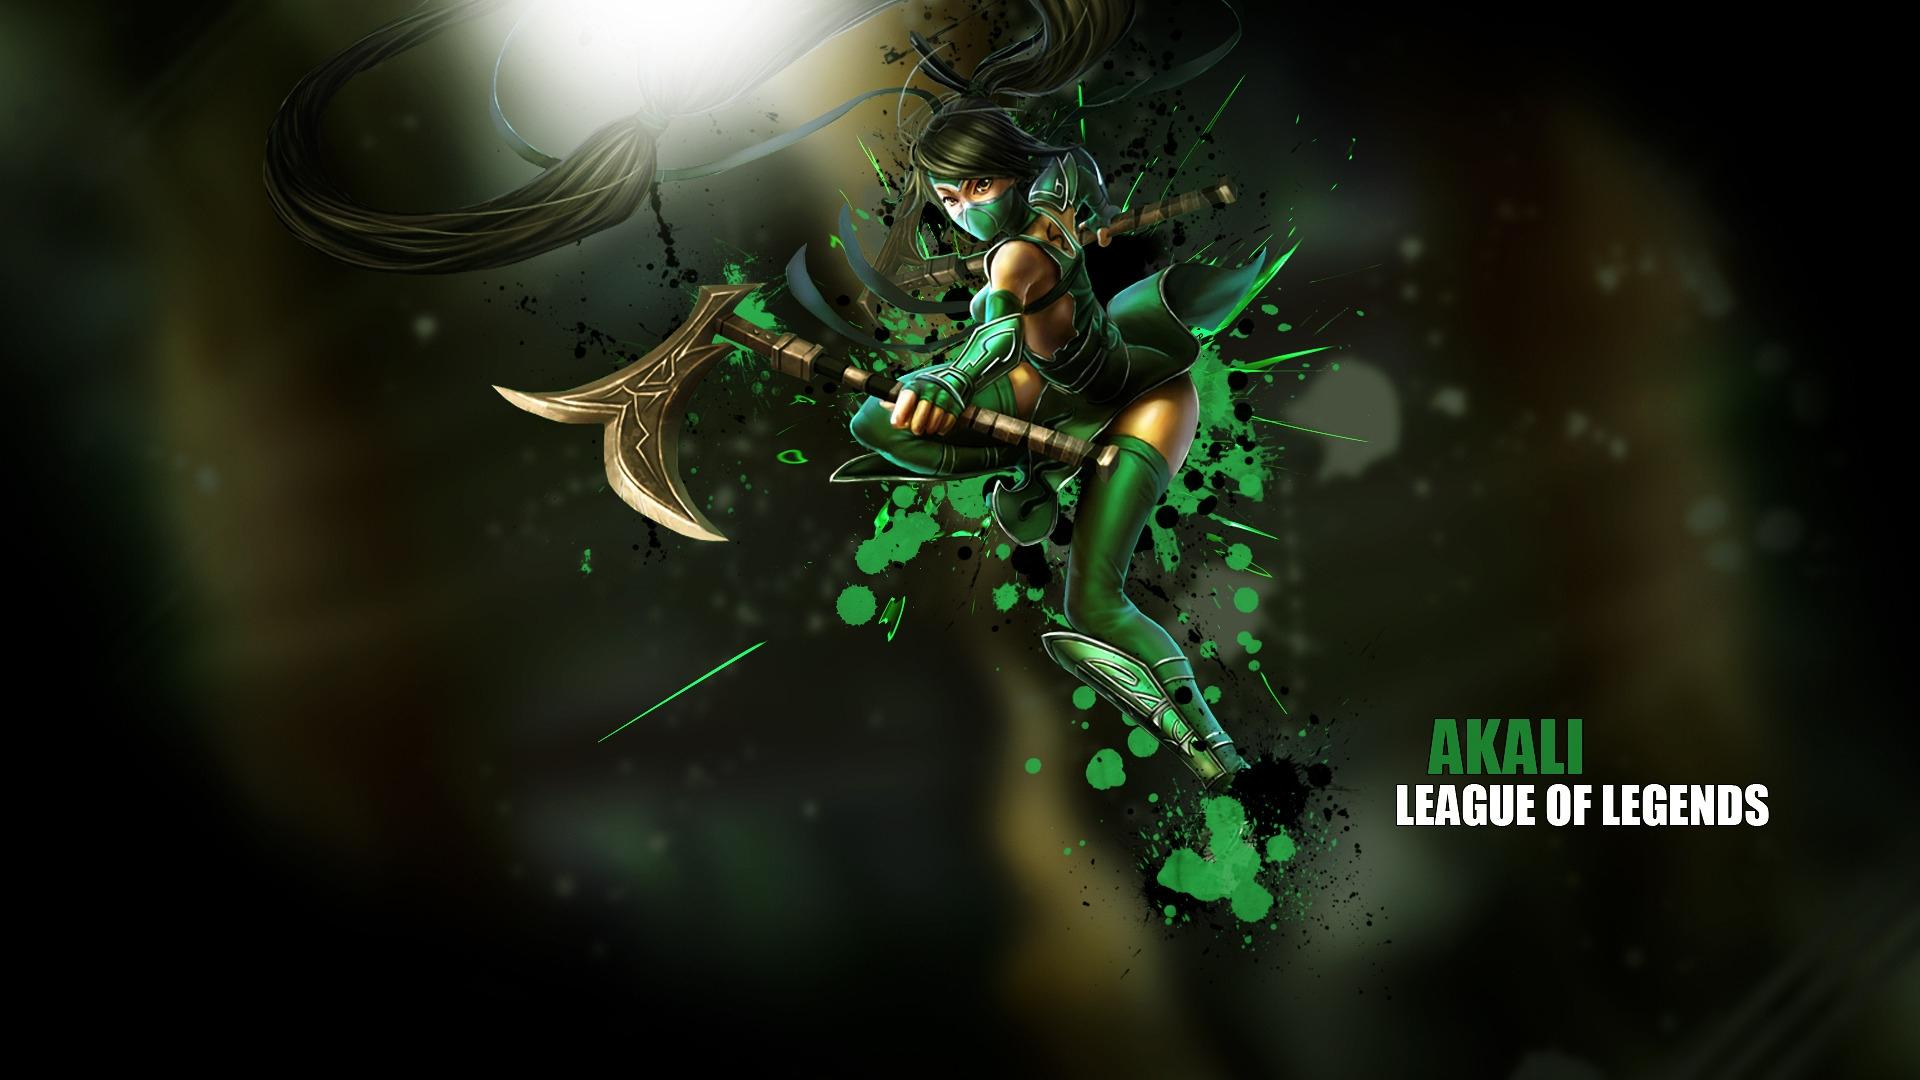 Download the Akali League of Legends Wallpaper, Akali League